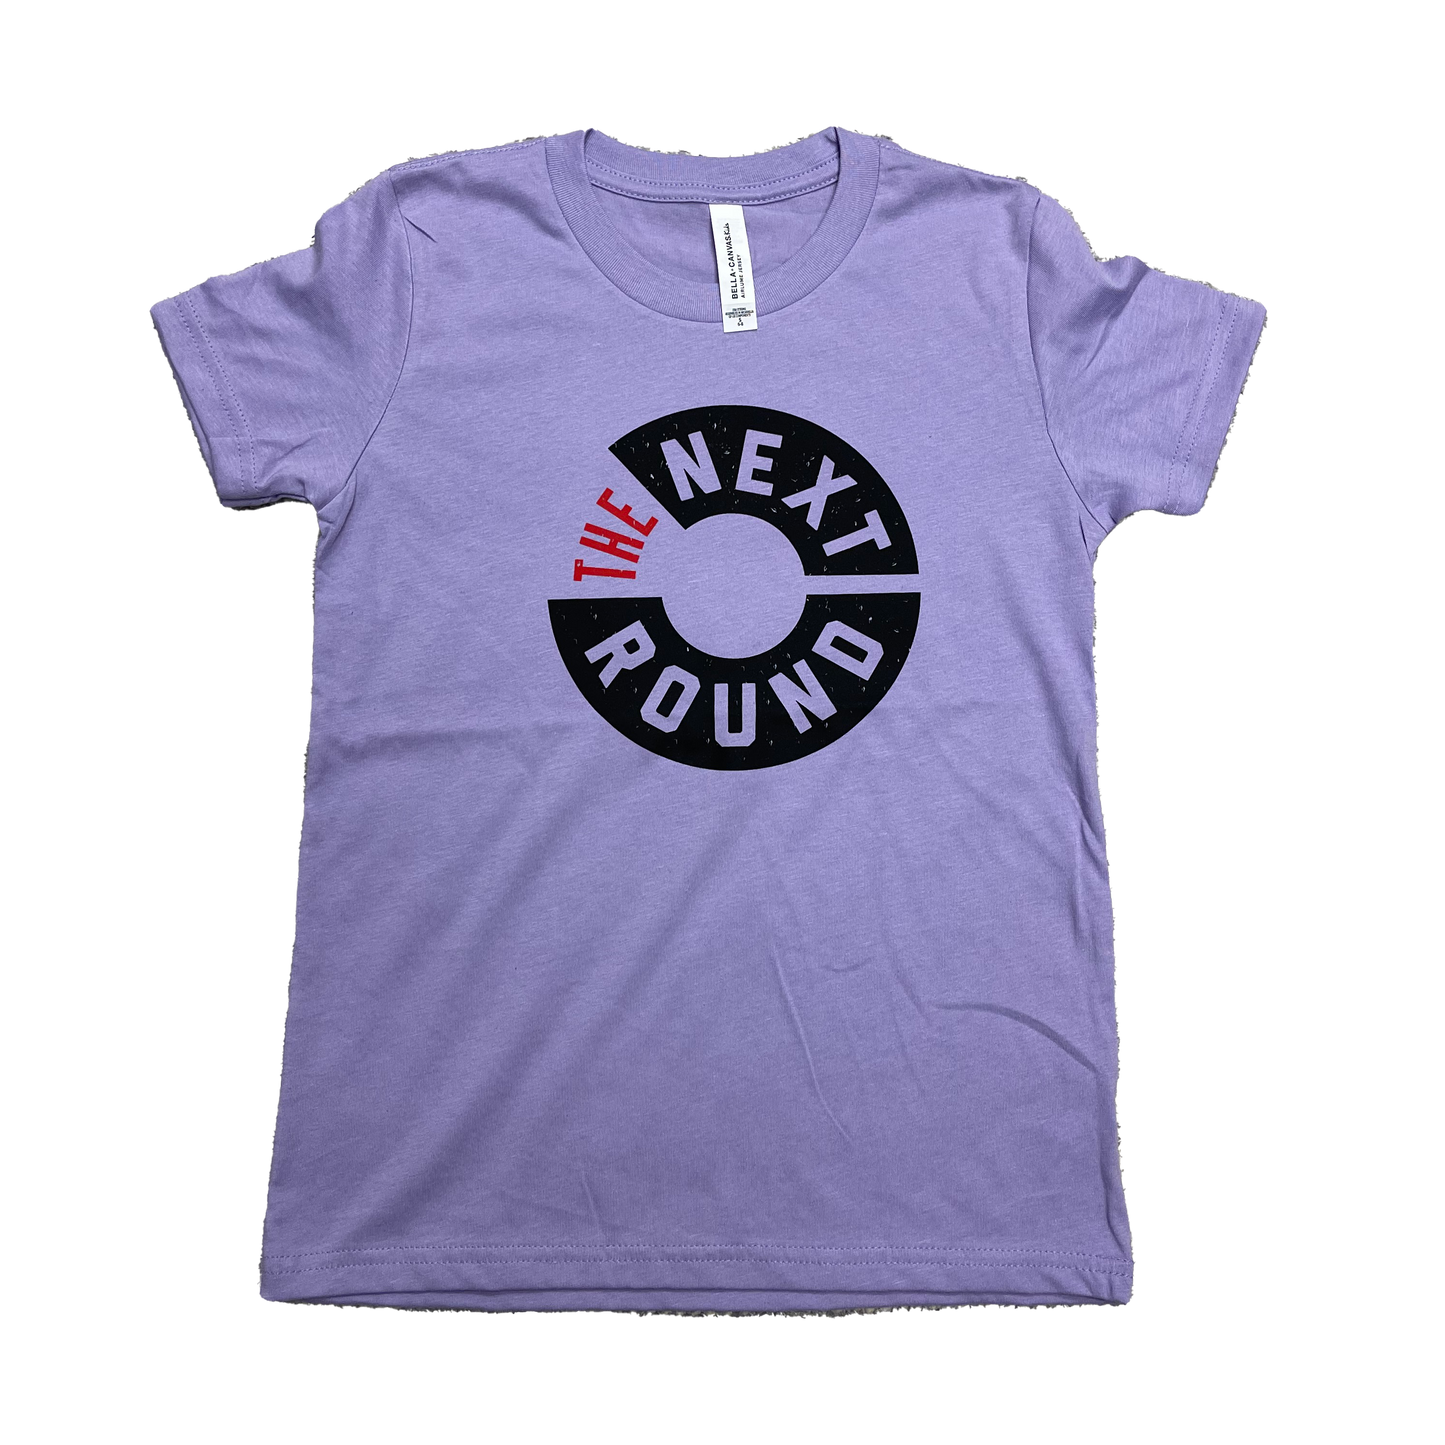 Youth Girls Purple TNR Logo Shirt